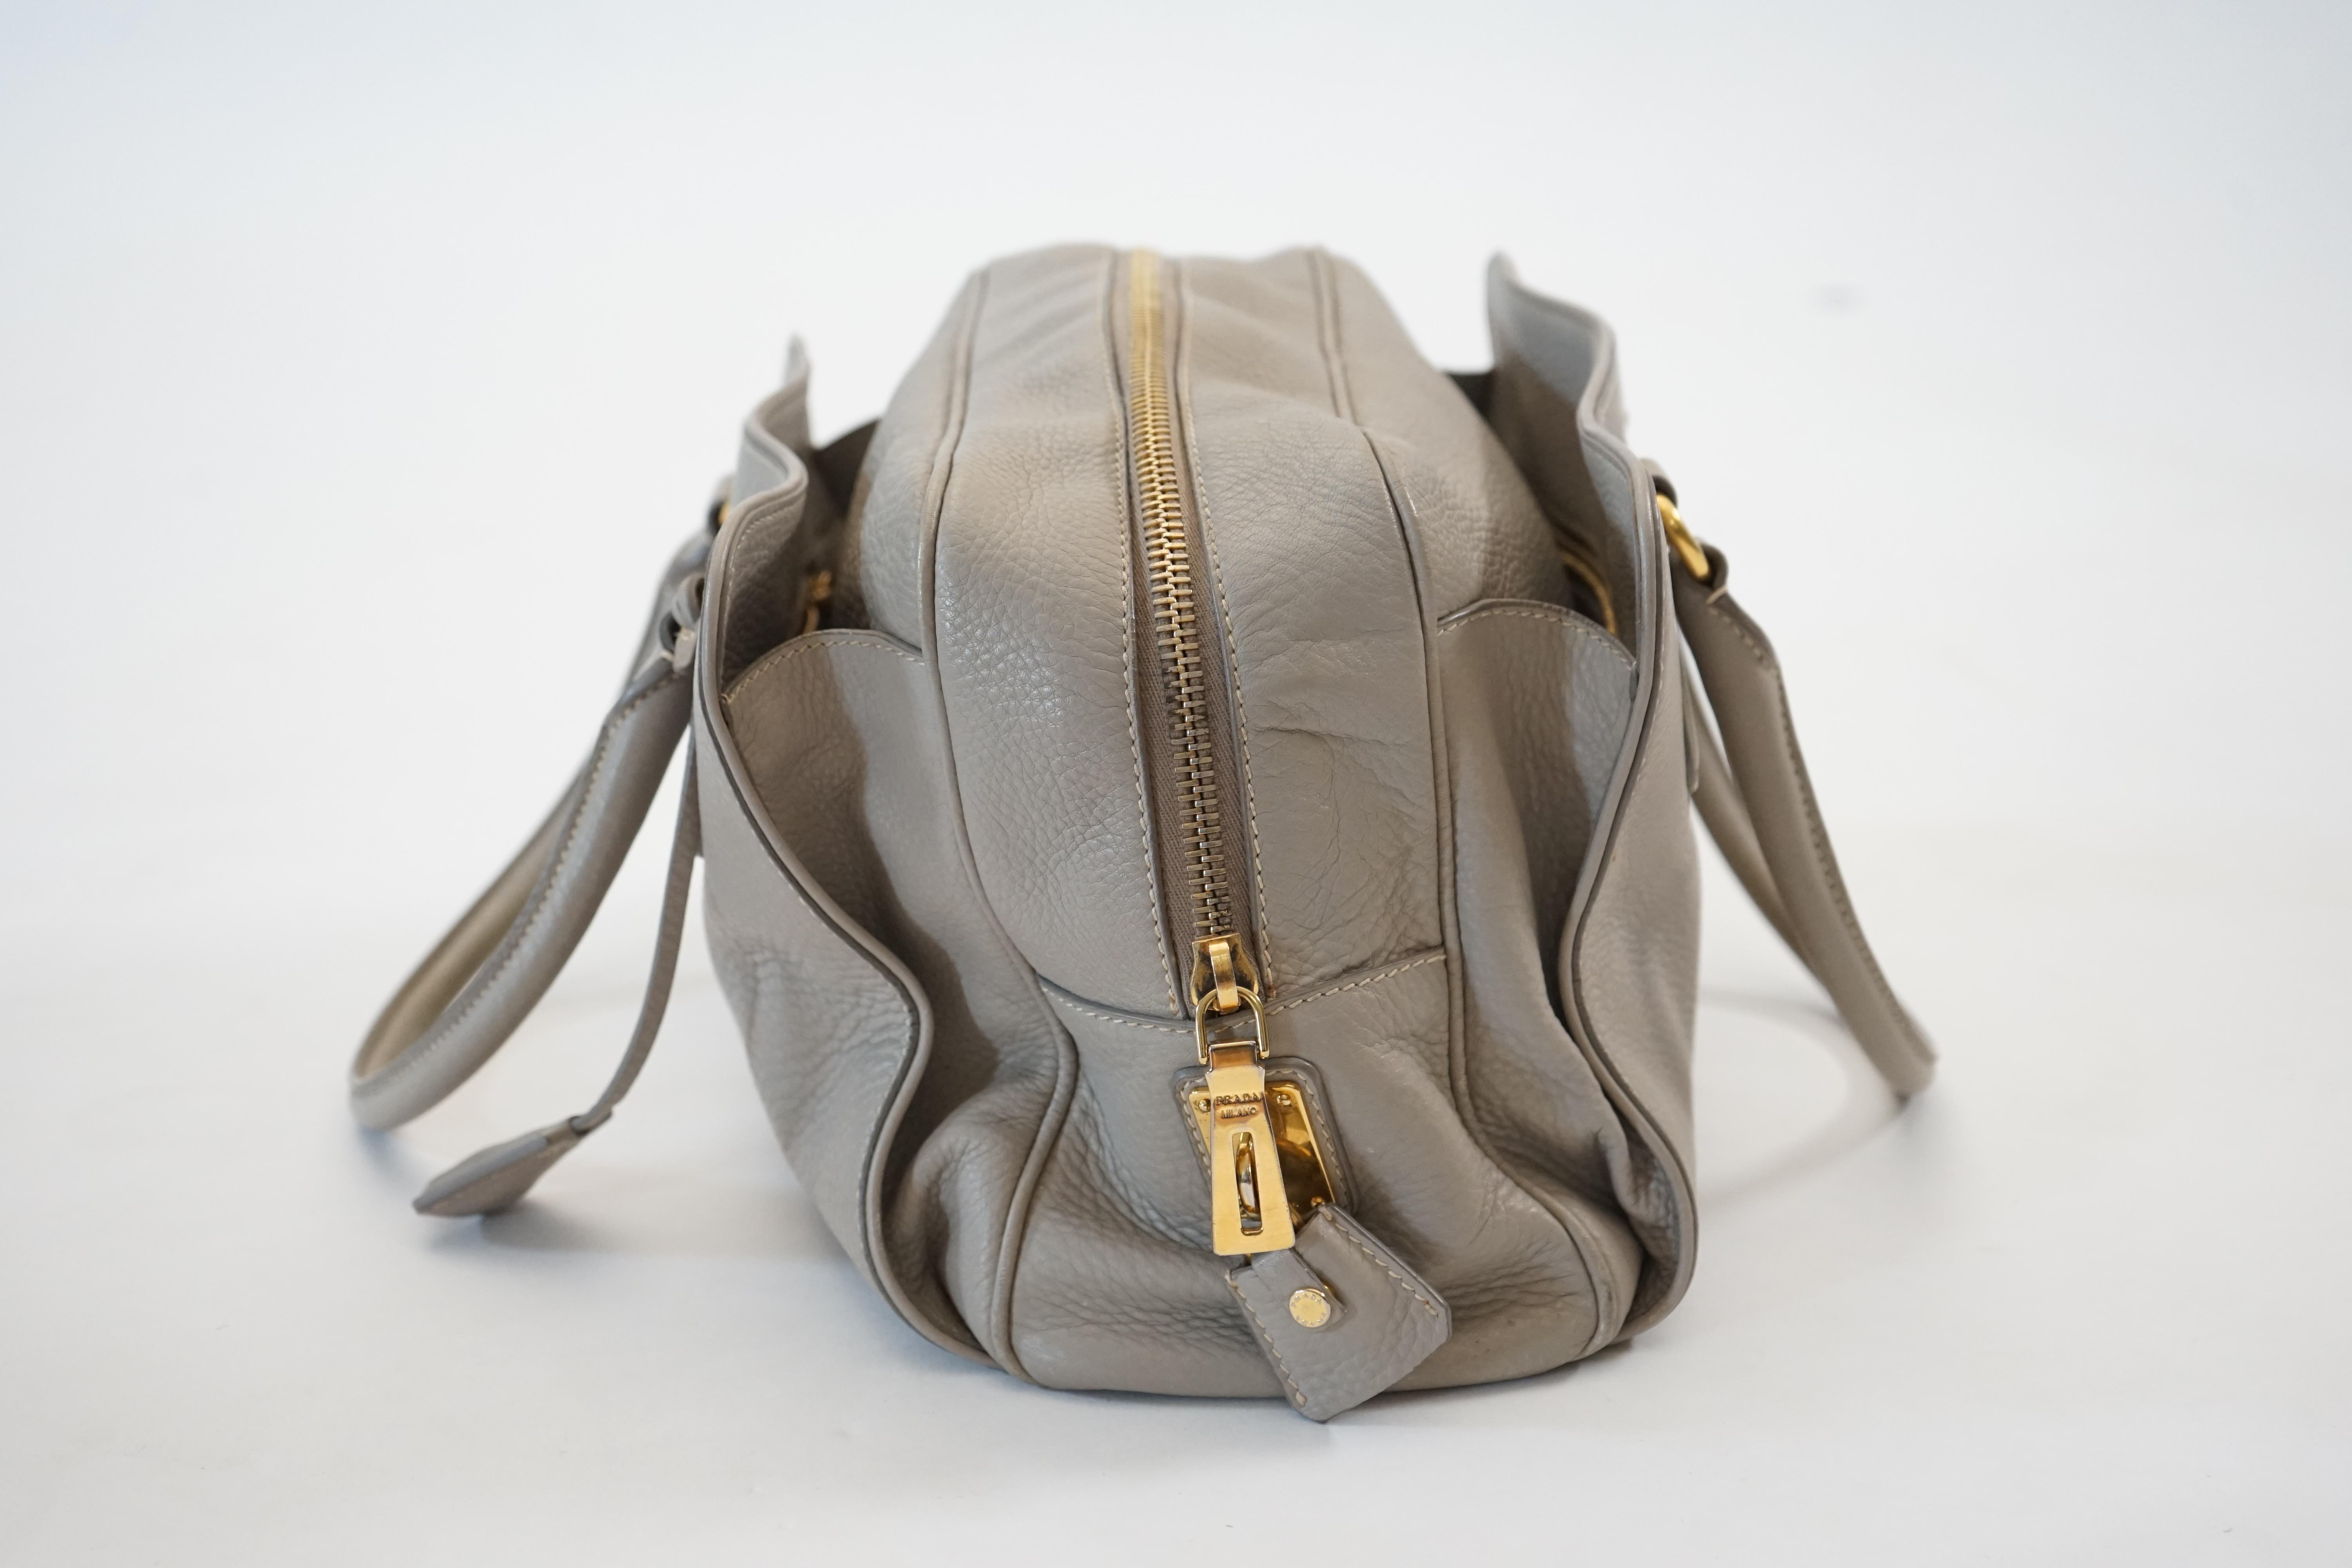 A Prada Vitello Daino Pomice leather handbag, width 35cm, depth 20cm, approx height 20cm